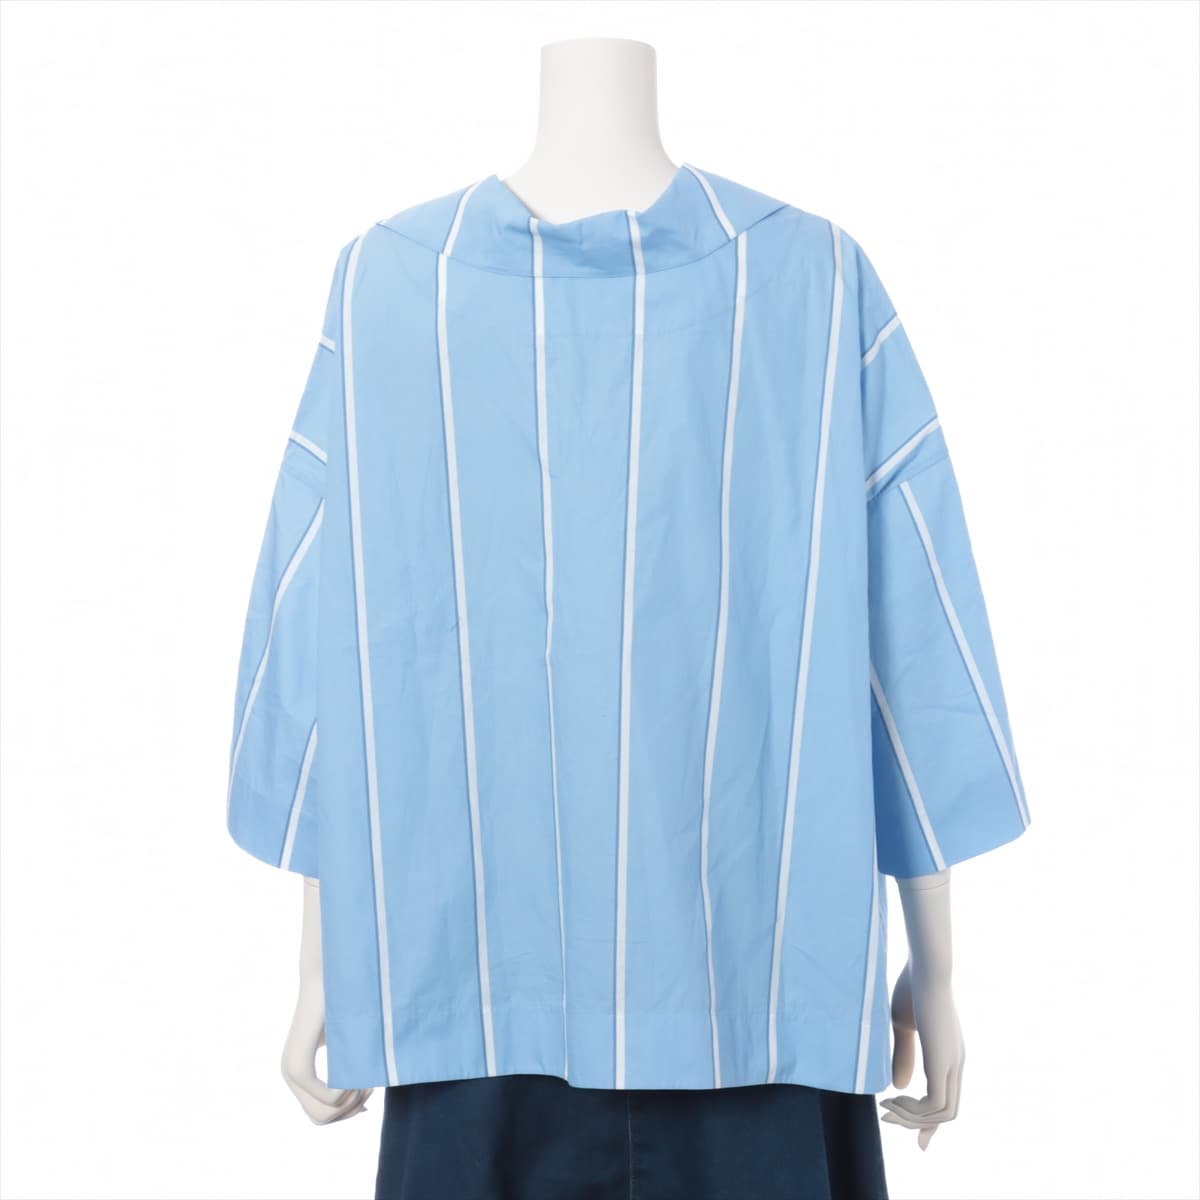 Balenciaga 17 years Cotton Shirt 36 Ladies' Blue  stripes